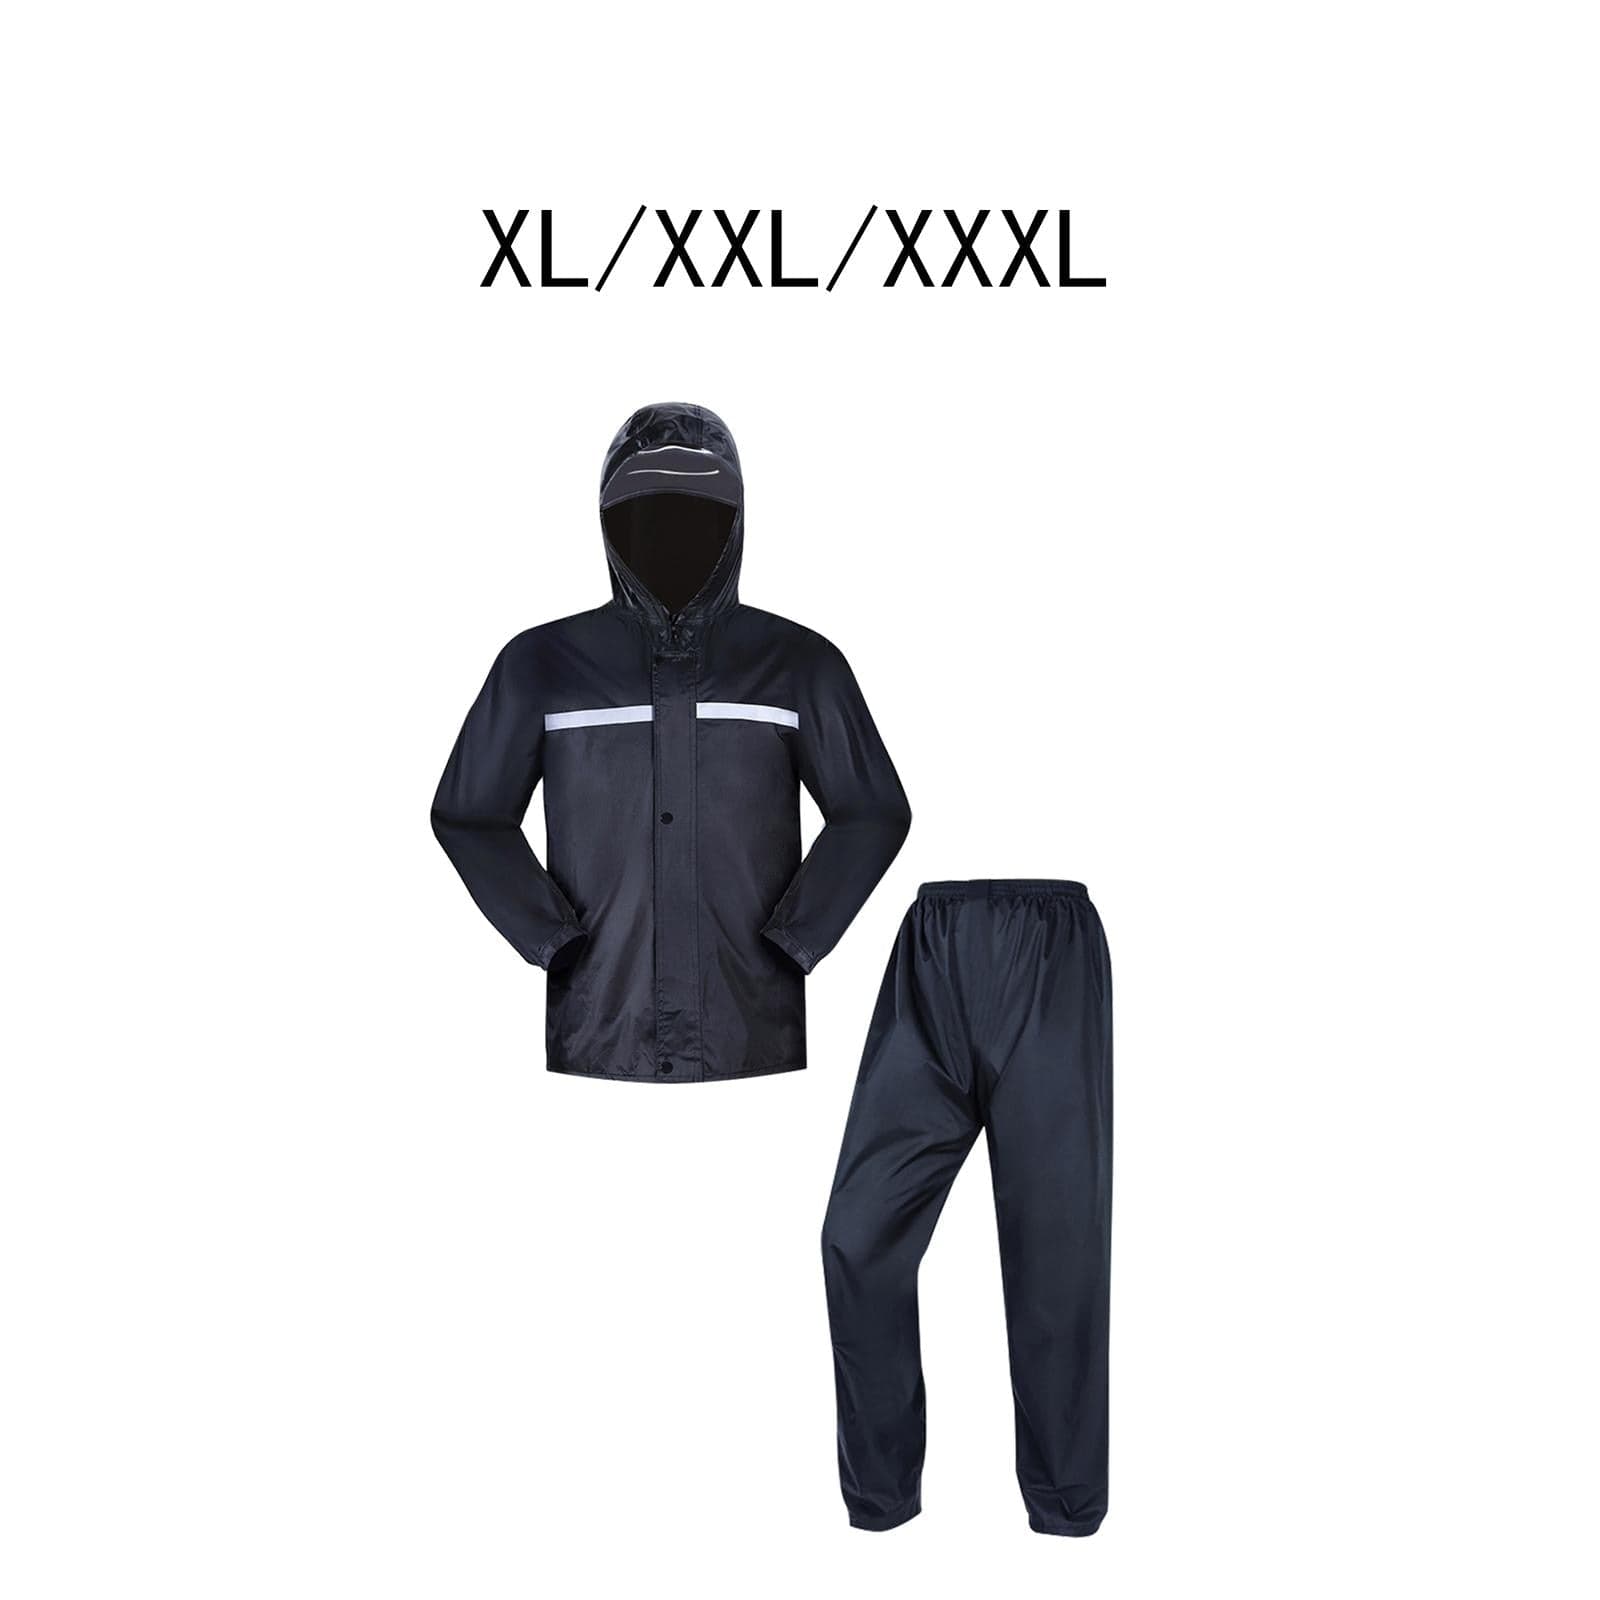 MIERSPORT Rain Suit Waterproof Jacket Breathable Rain Coat Pants Adult